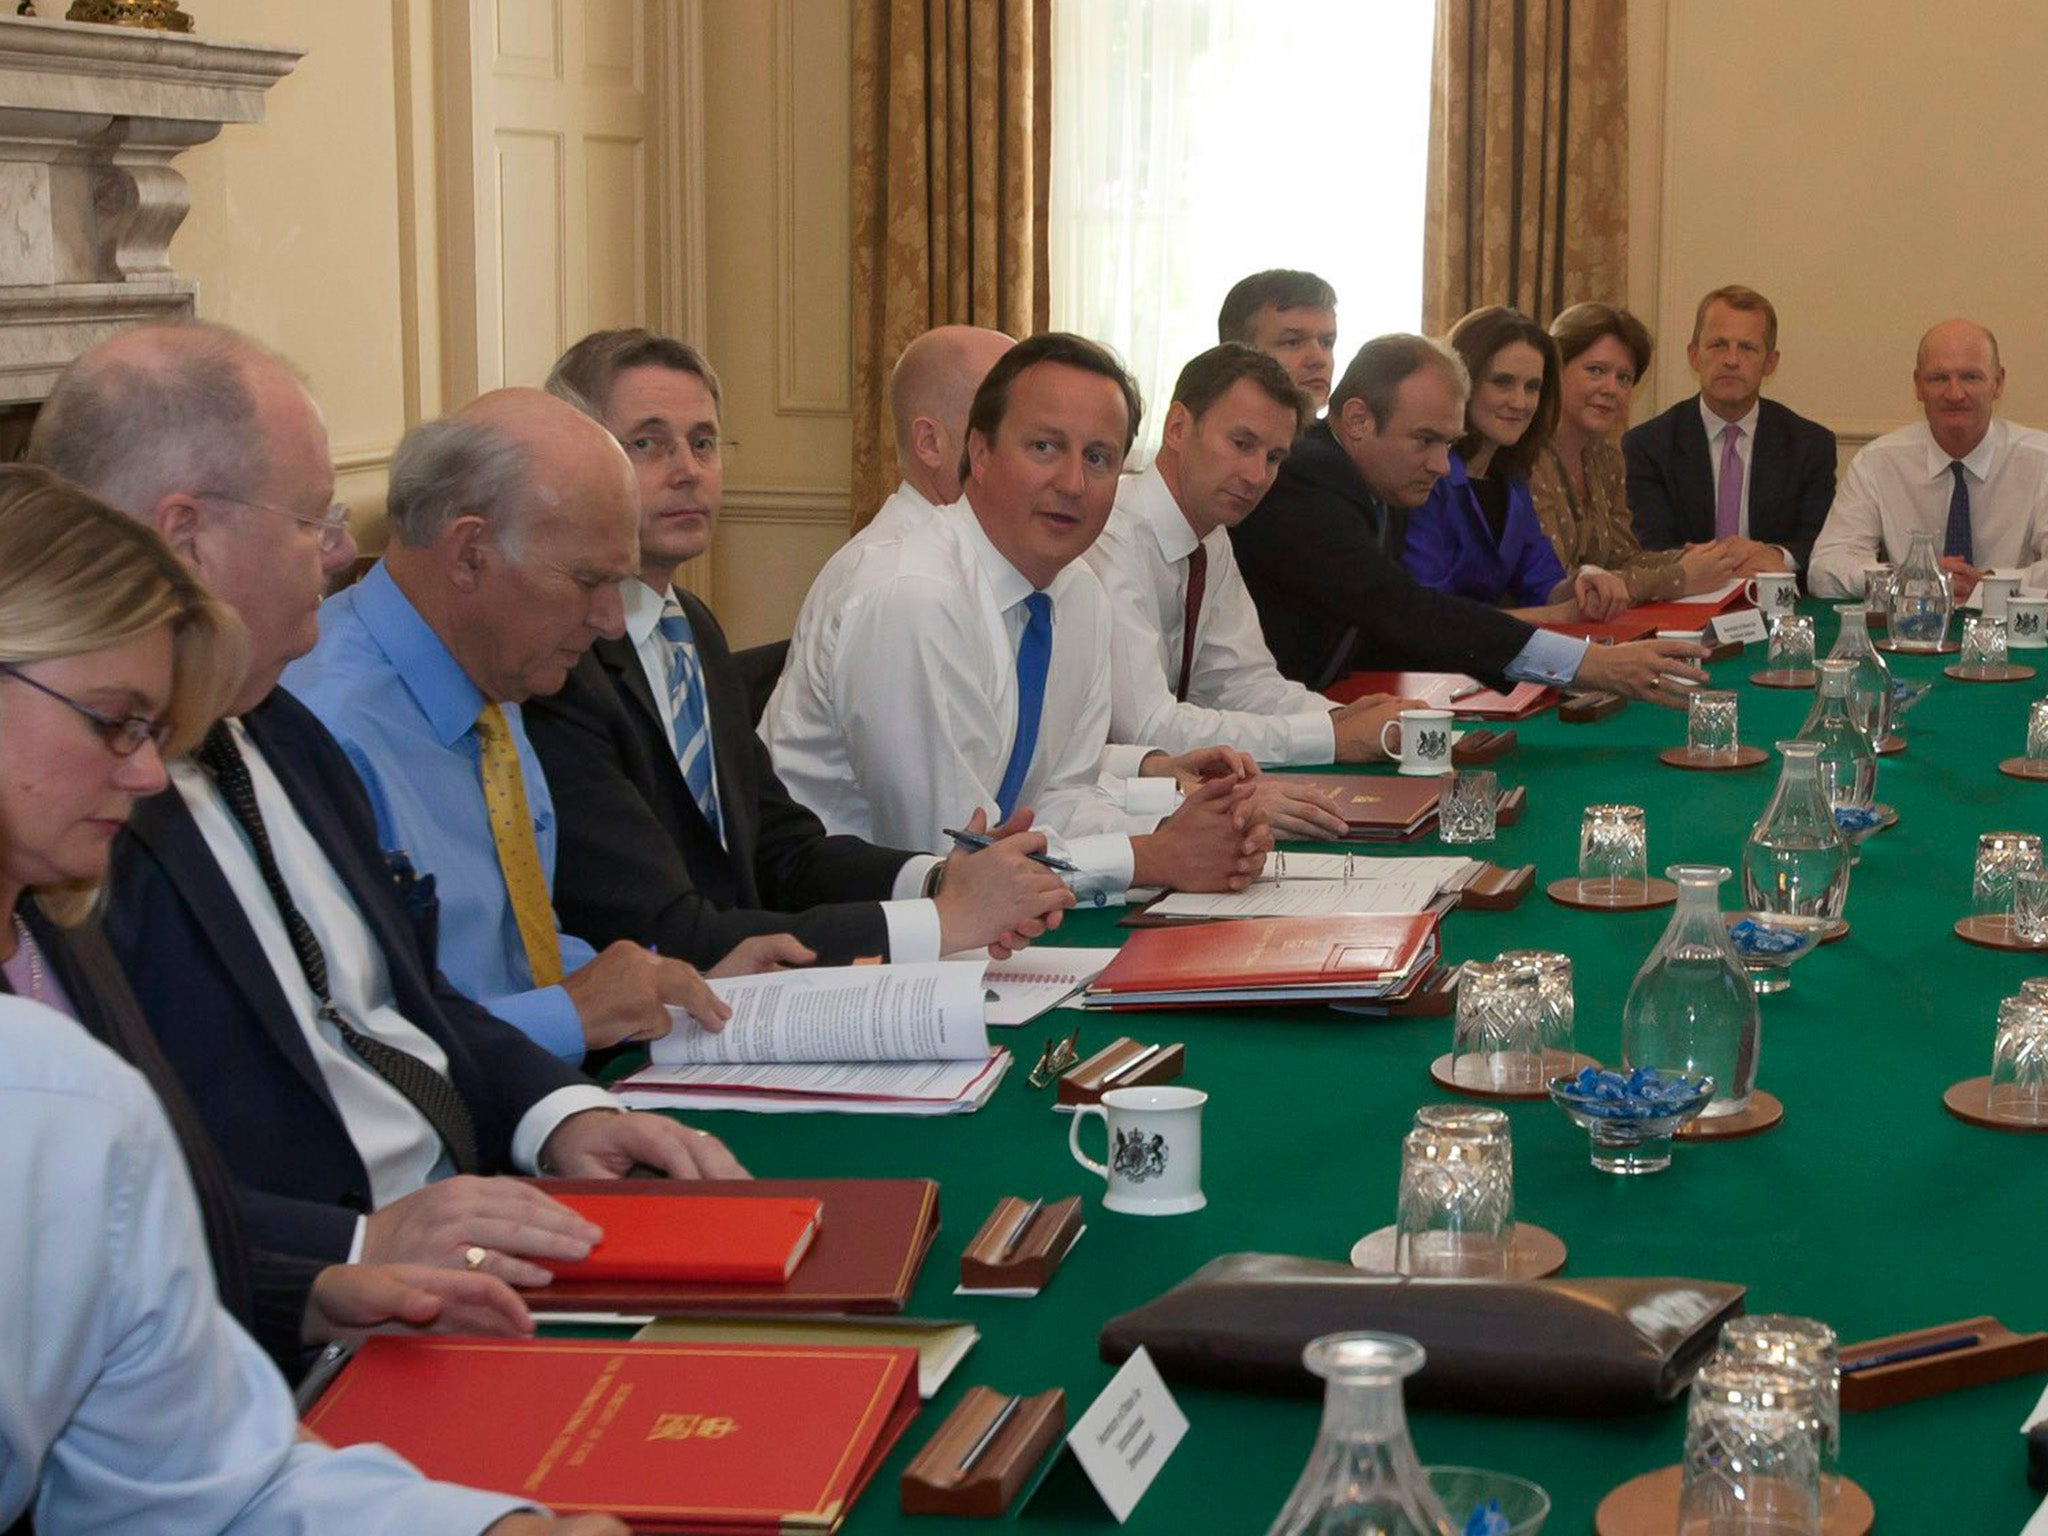 Mr Hunt in former leader David Cameron’s cabinet in 2012